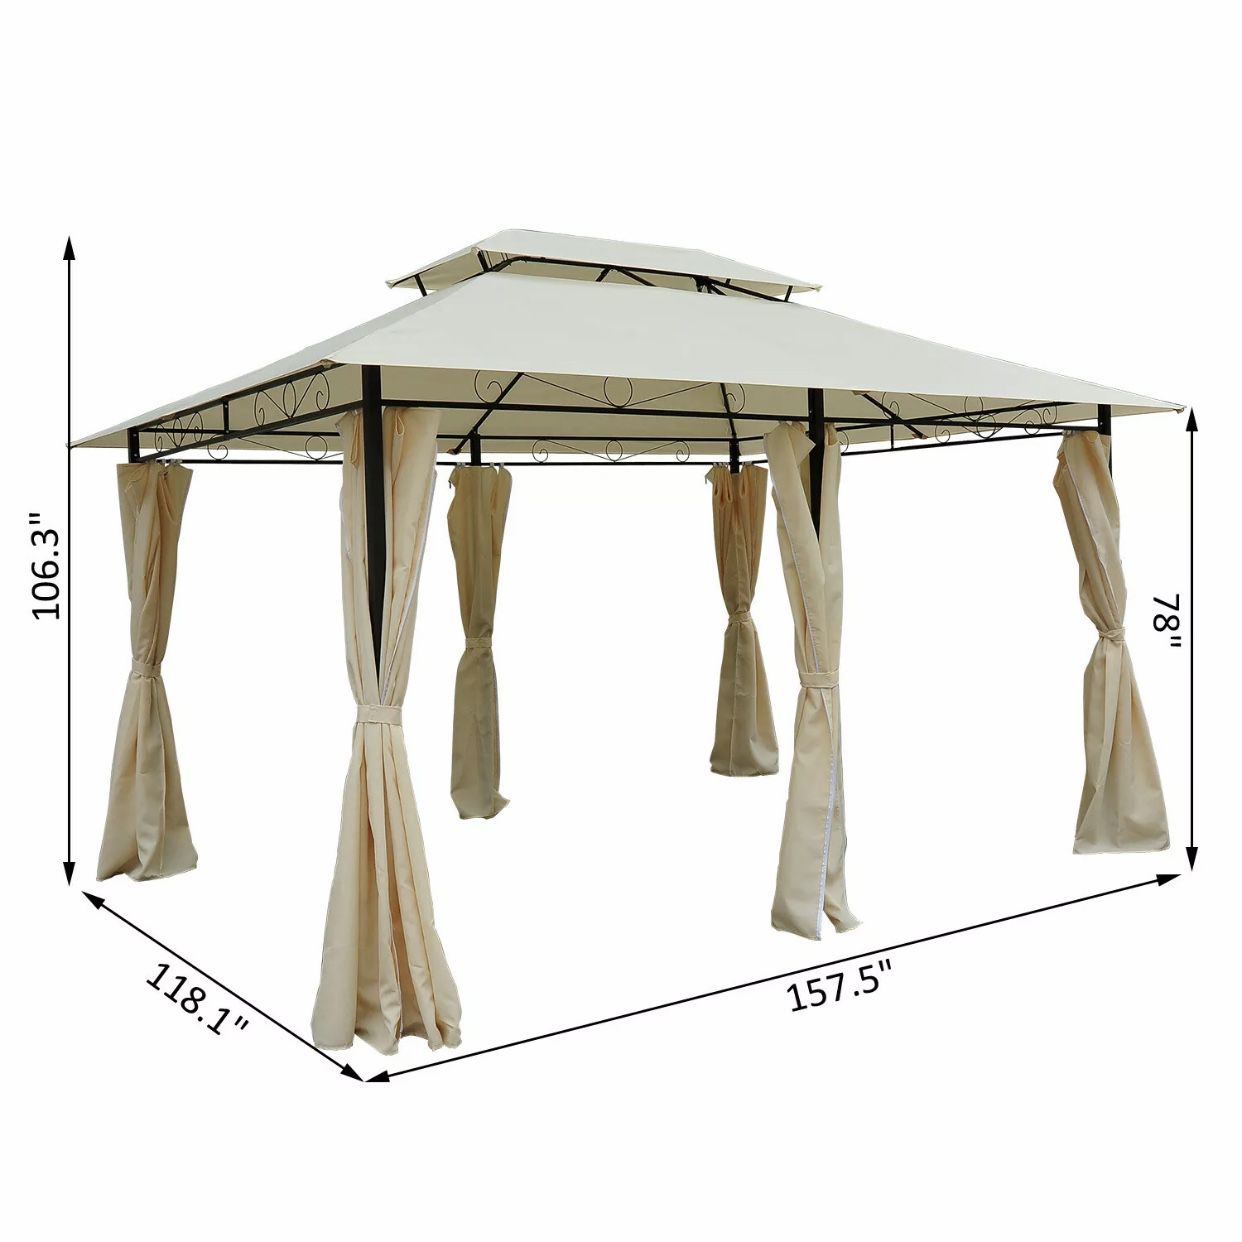 10x13 Outdoor CABANA w/ Steel Frame & Removable Curtains, Cream White gazebo shed shade pergola canopy carport 